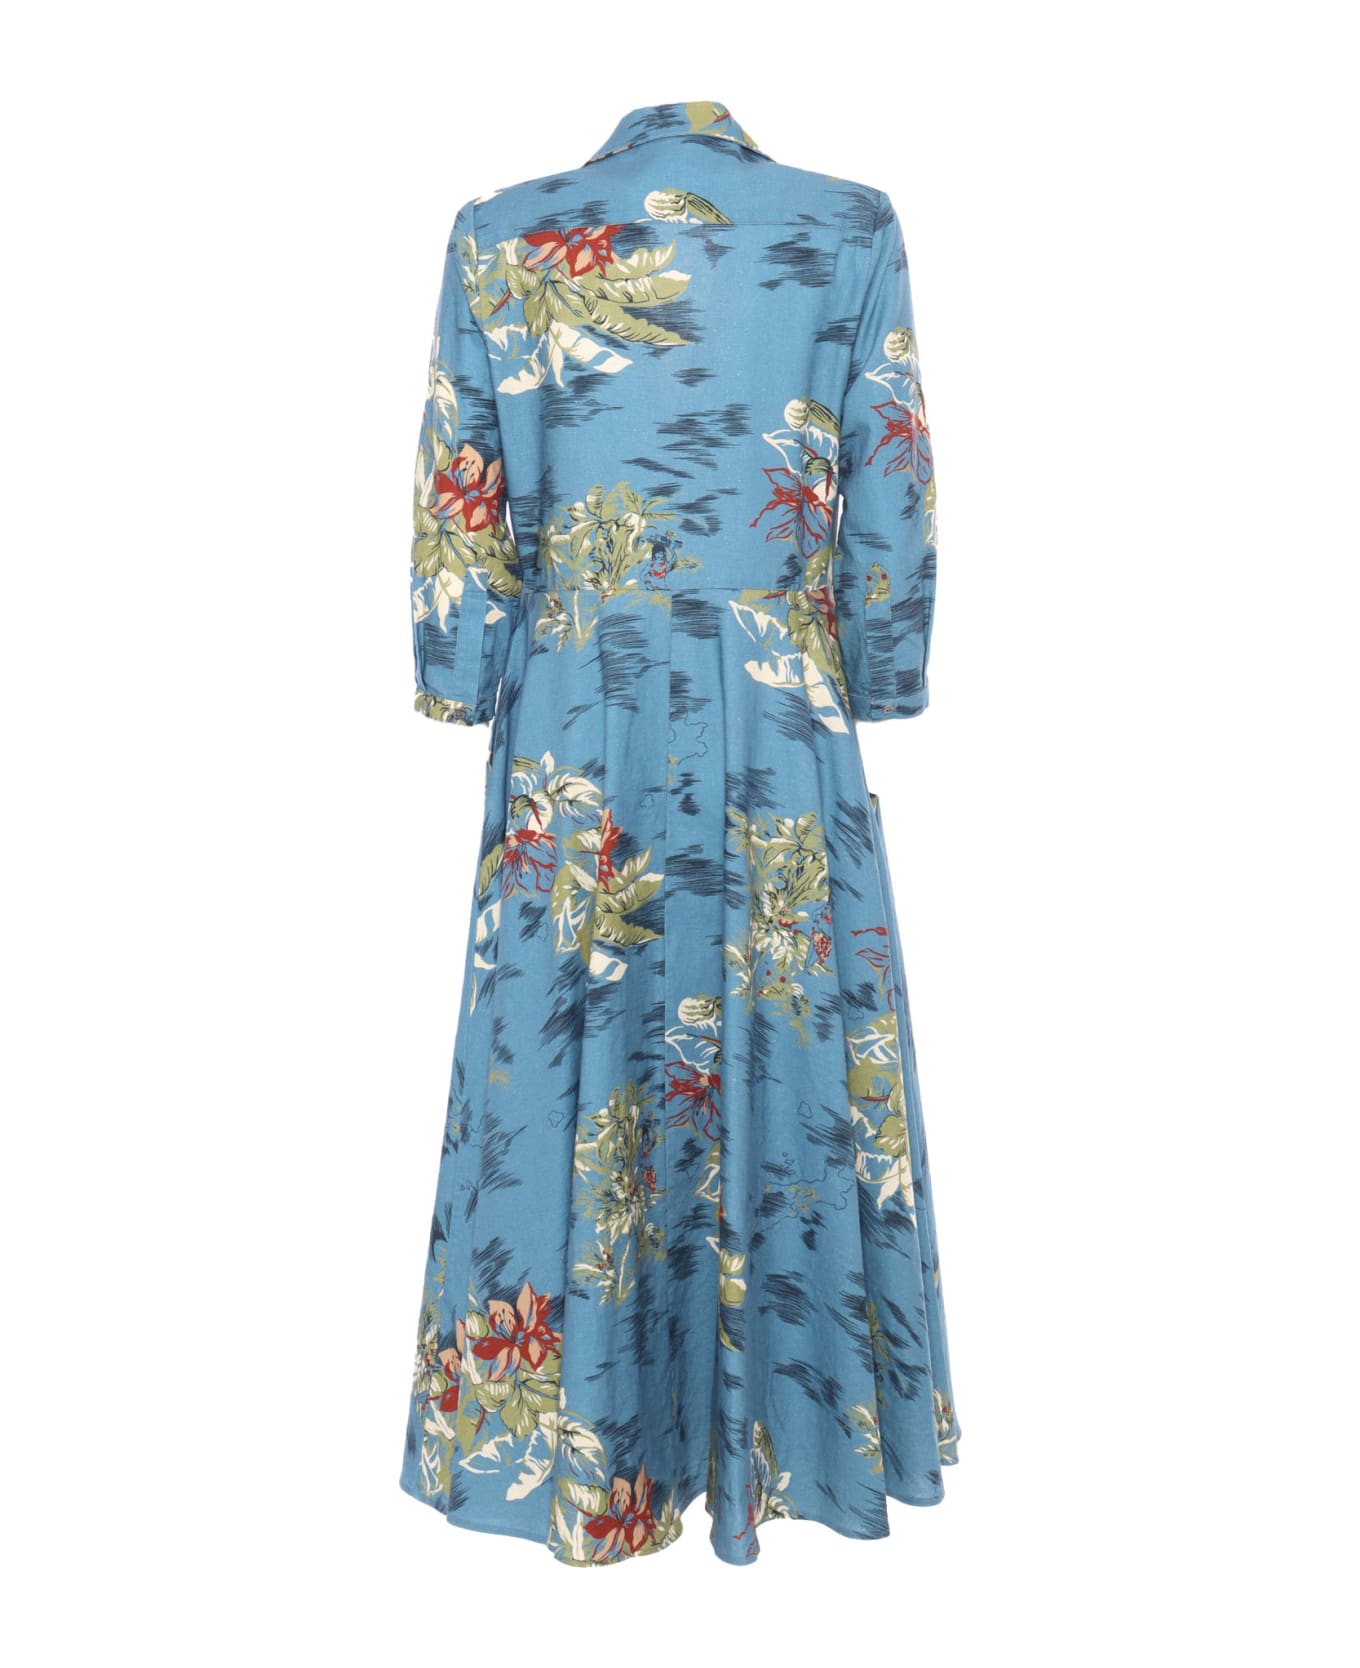 Aspesi Floral Blue Dress - LIGHT BLUE